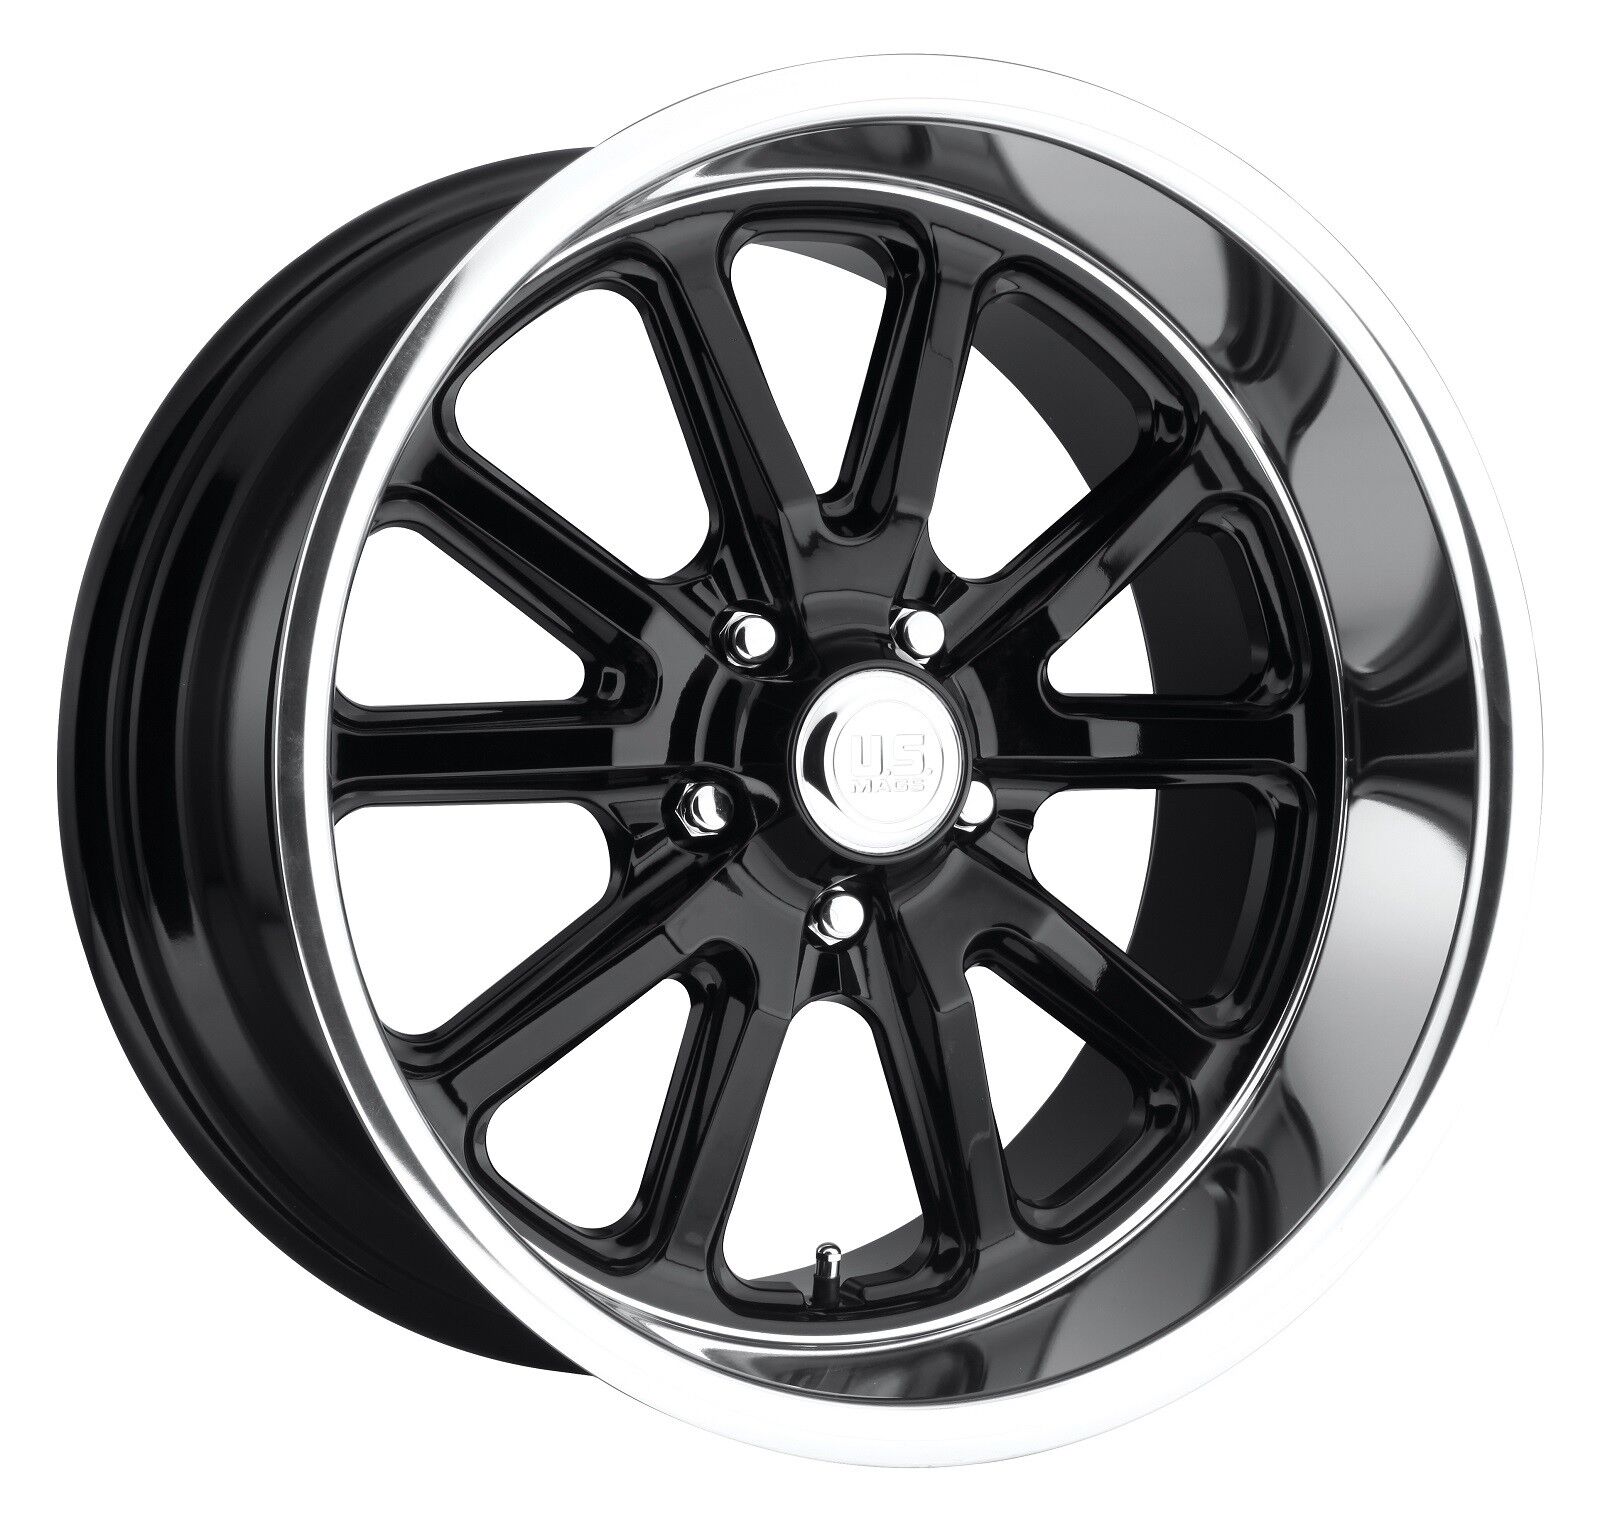 CPP US Mags U121 Rambler wheels 20x8 + 20x9.5 fits: CADILLAC ELDORADO FLEETWOOD